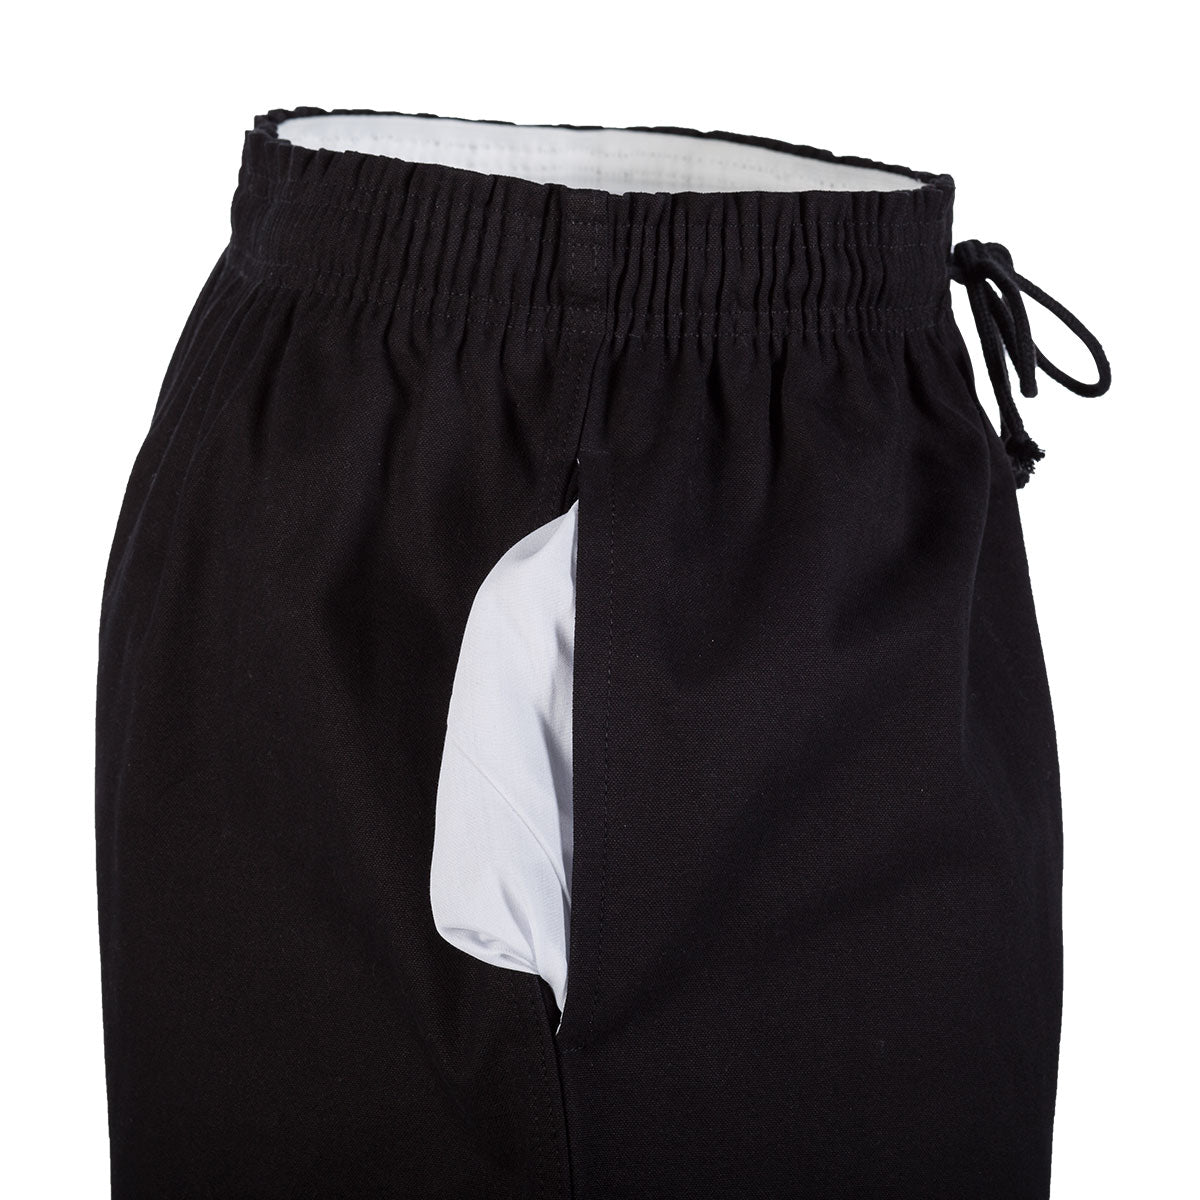 10 oz. Middleweight Brushed Cotton Elastic Waist Pants (Black)